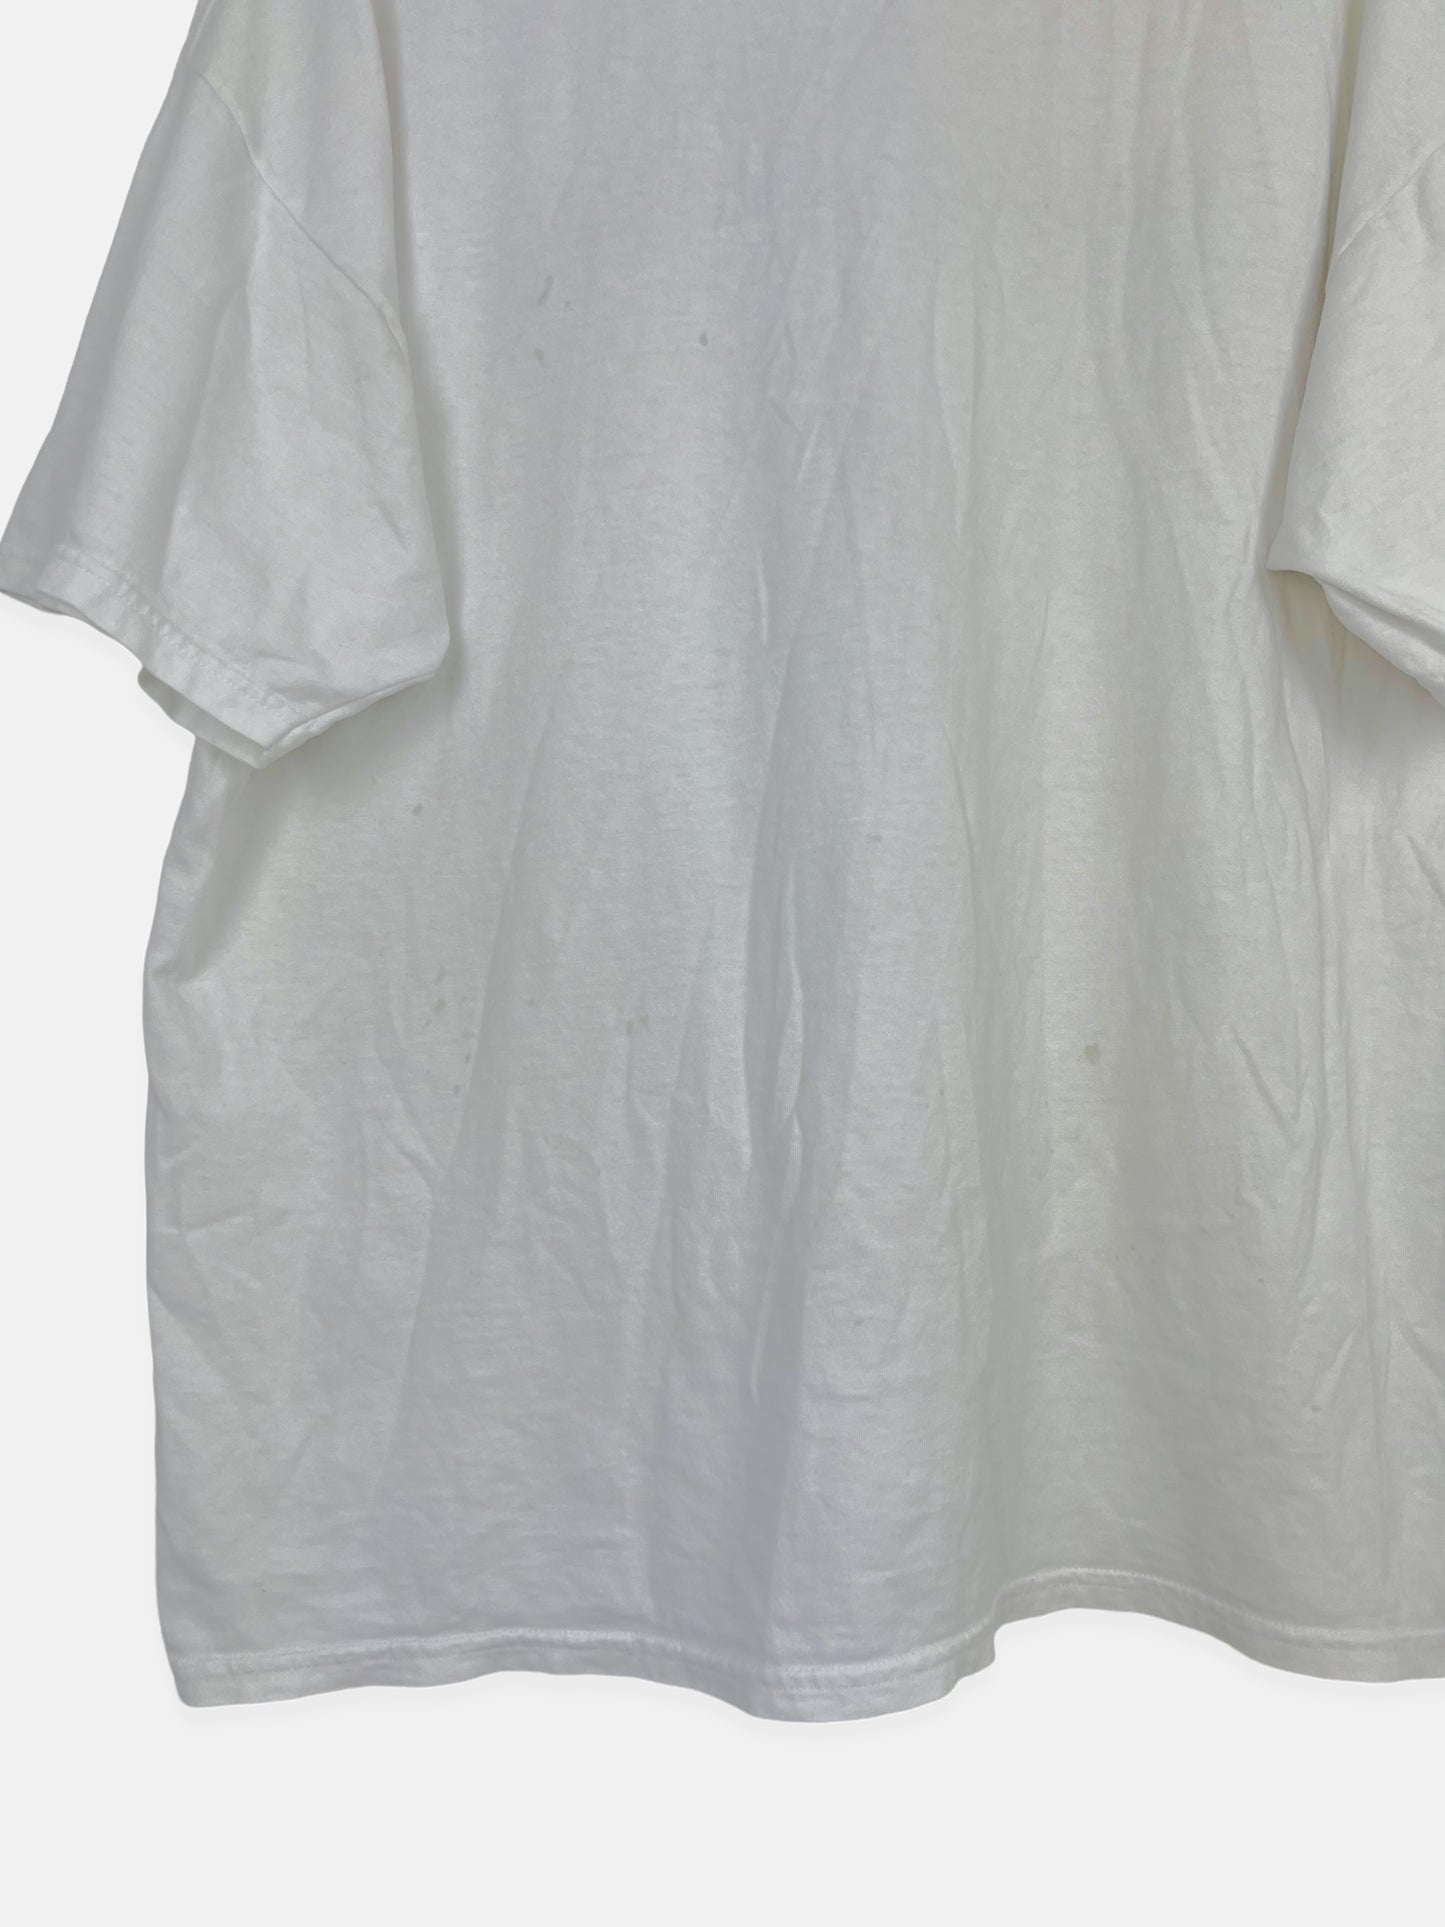 Arizona Diamondbacks MLB Vintage T-Shirt Size L-XL